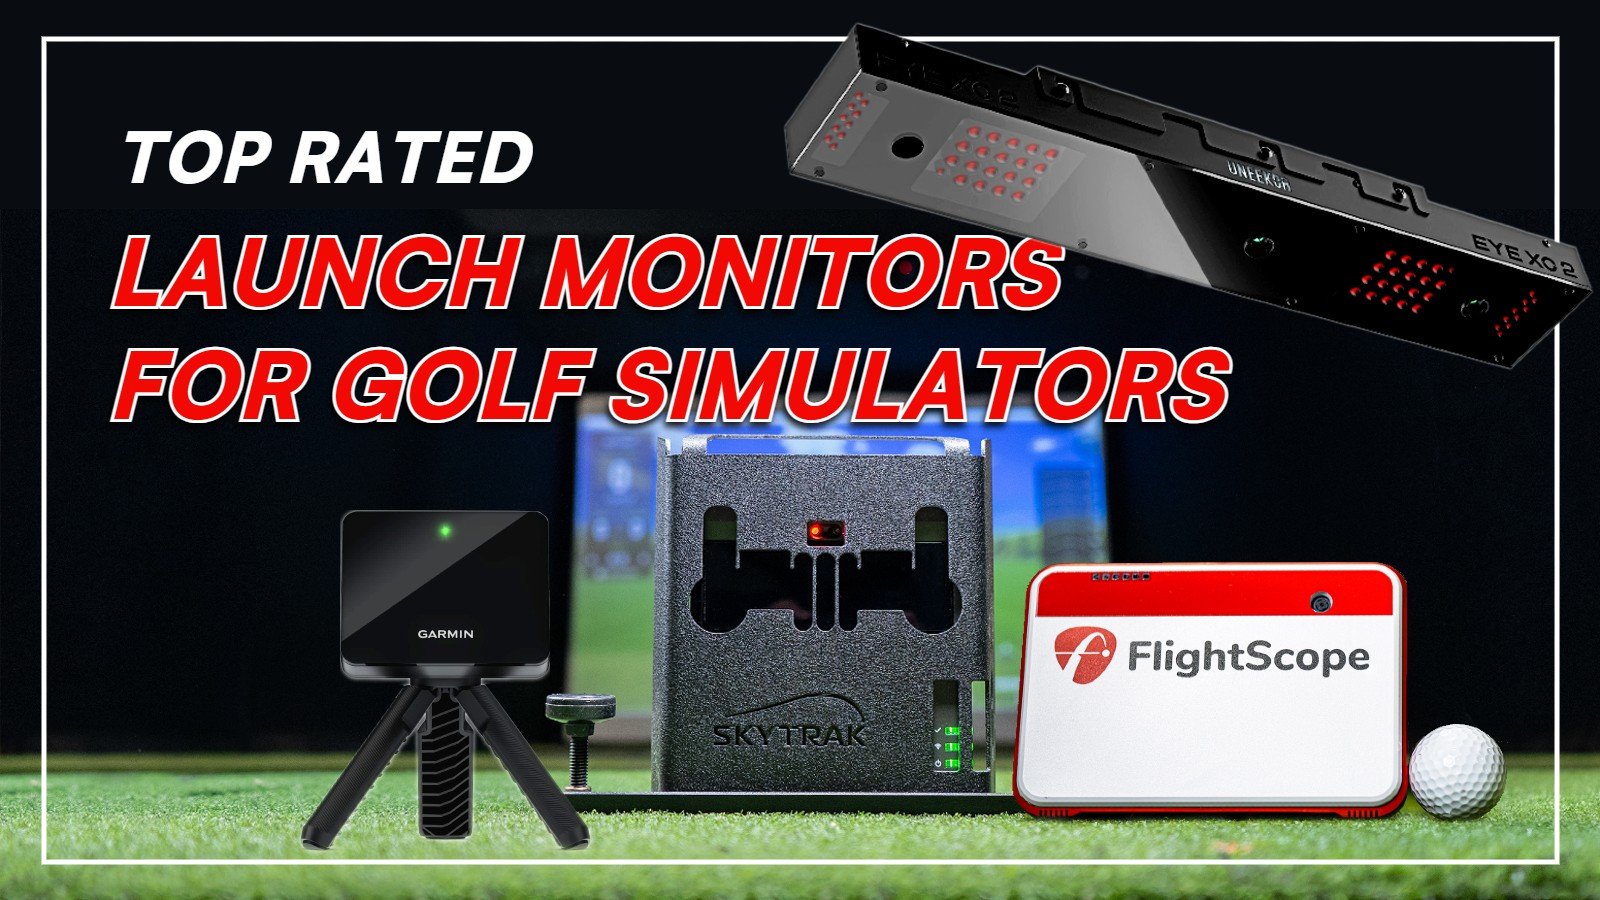 Top Rated Launch Monitors featuring EYE XO2, Garmin R10, SkyTrak and Mevo+